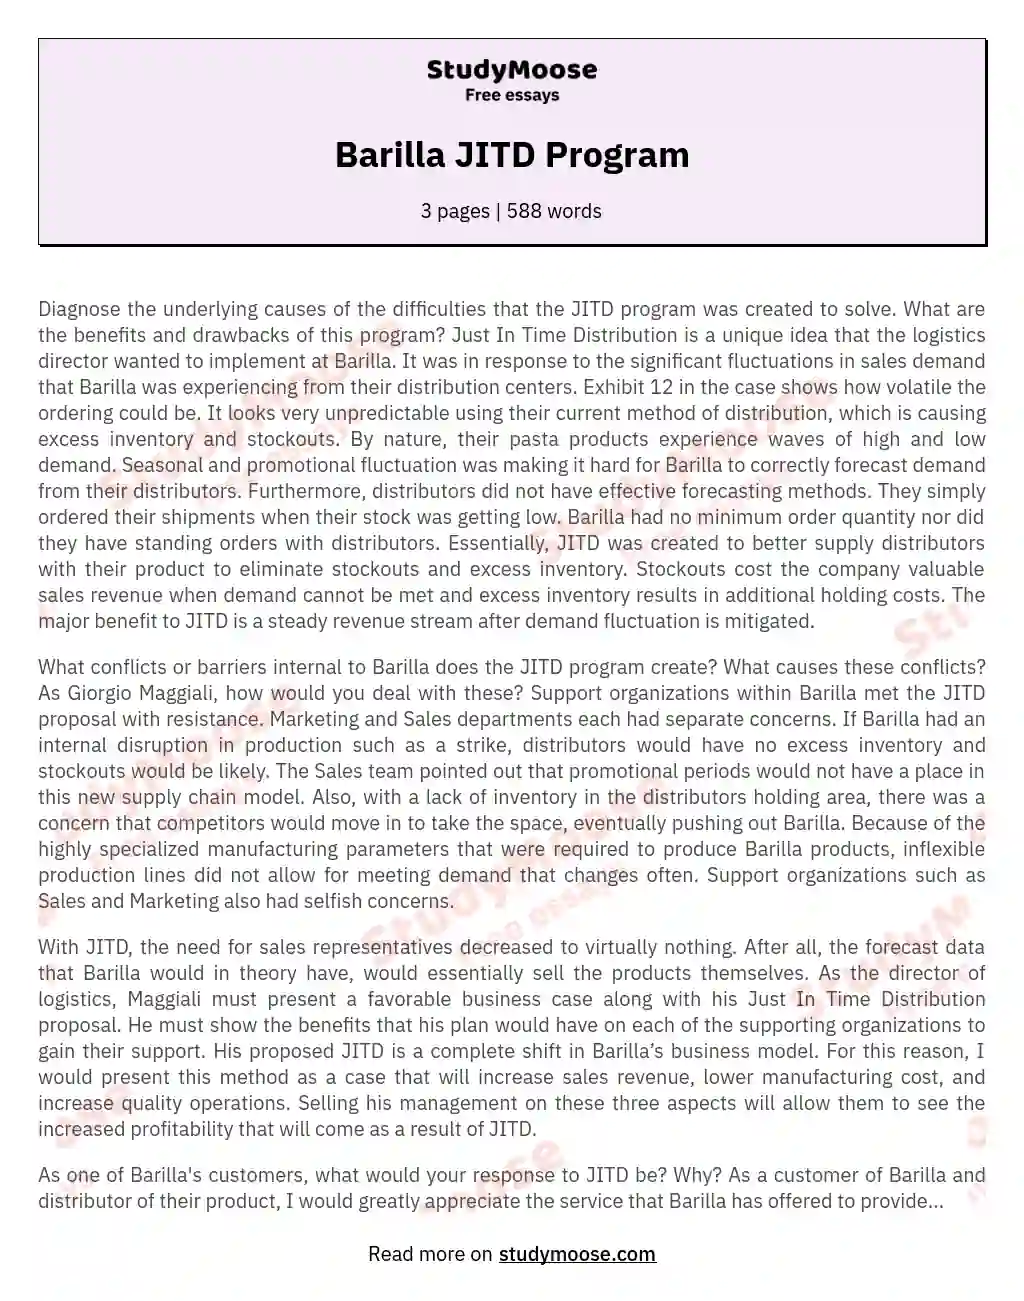 Barilla JITD Program essay